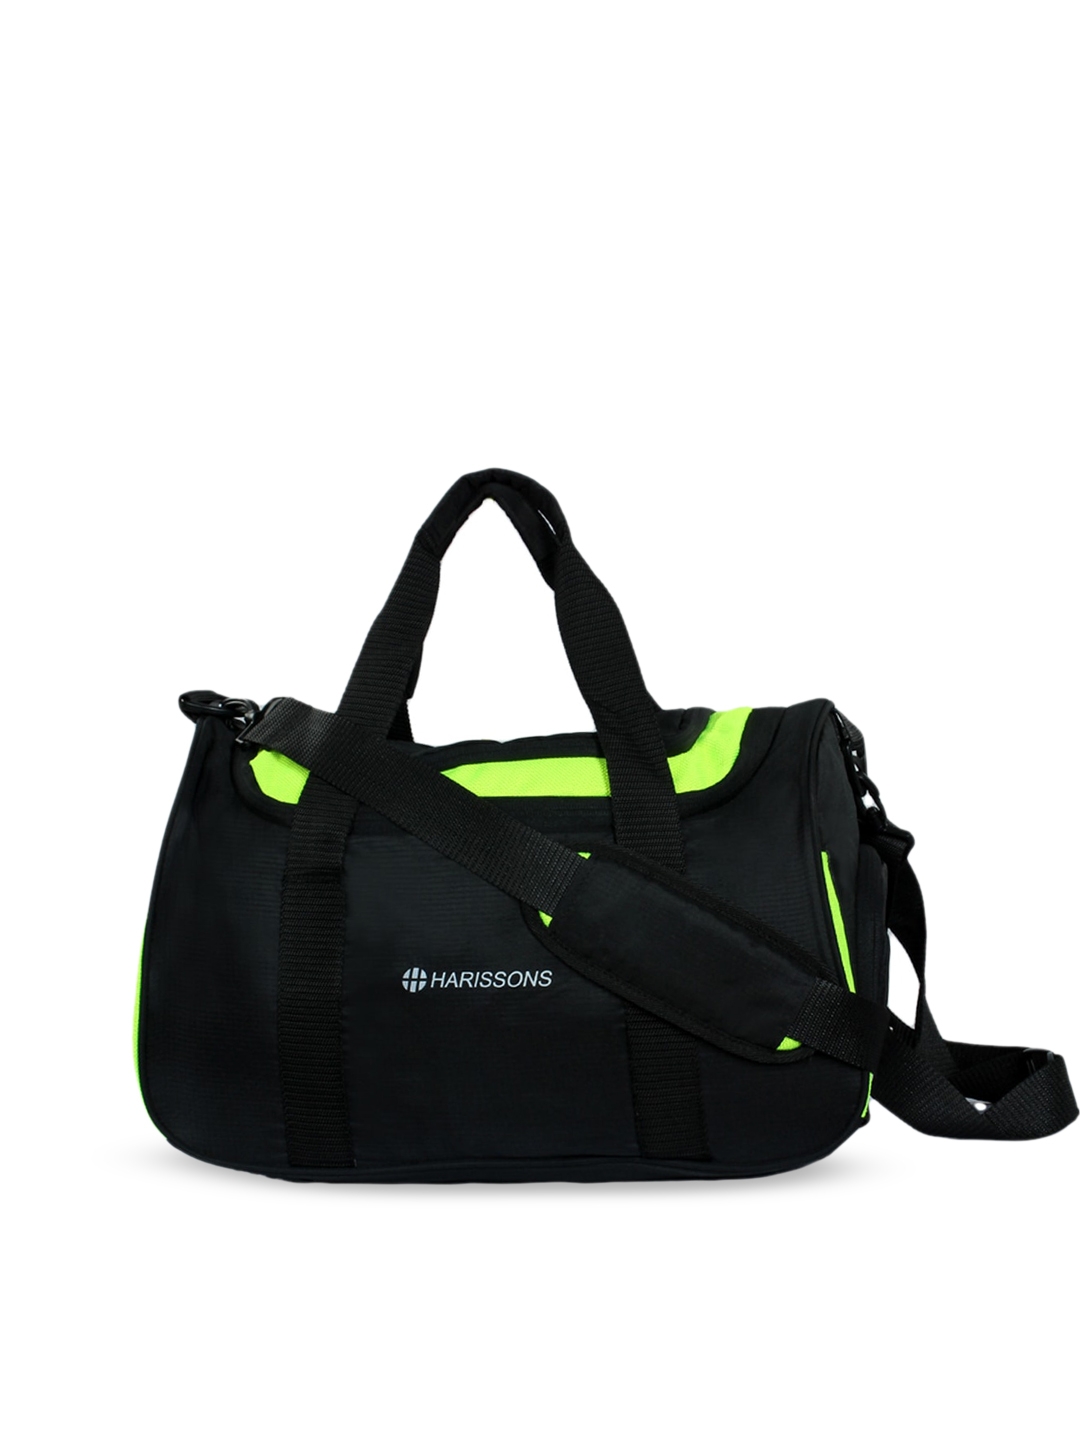 Harissons Black   Neon Green Float Gym Duffle Travel Bag